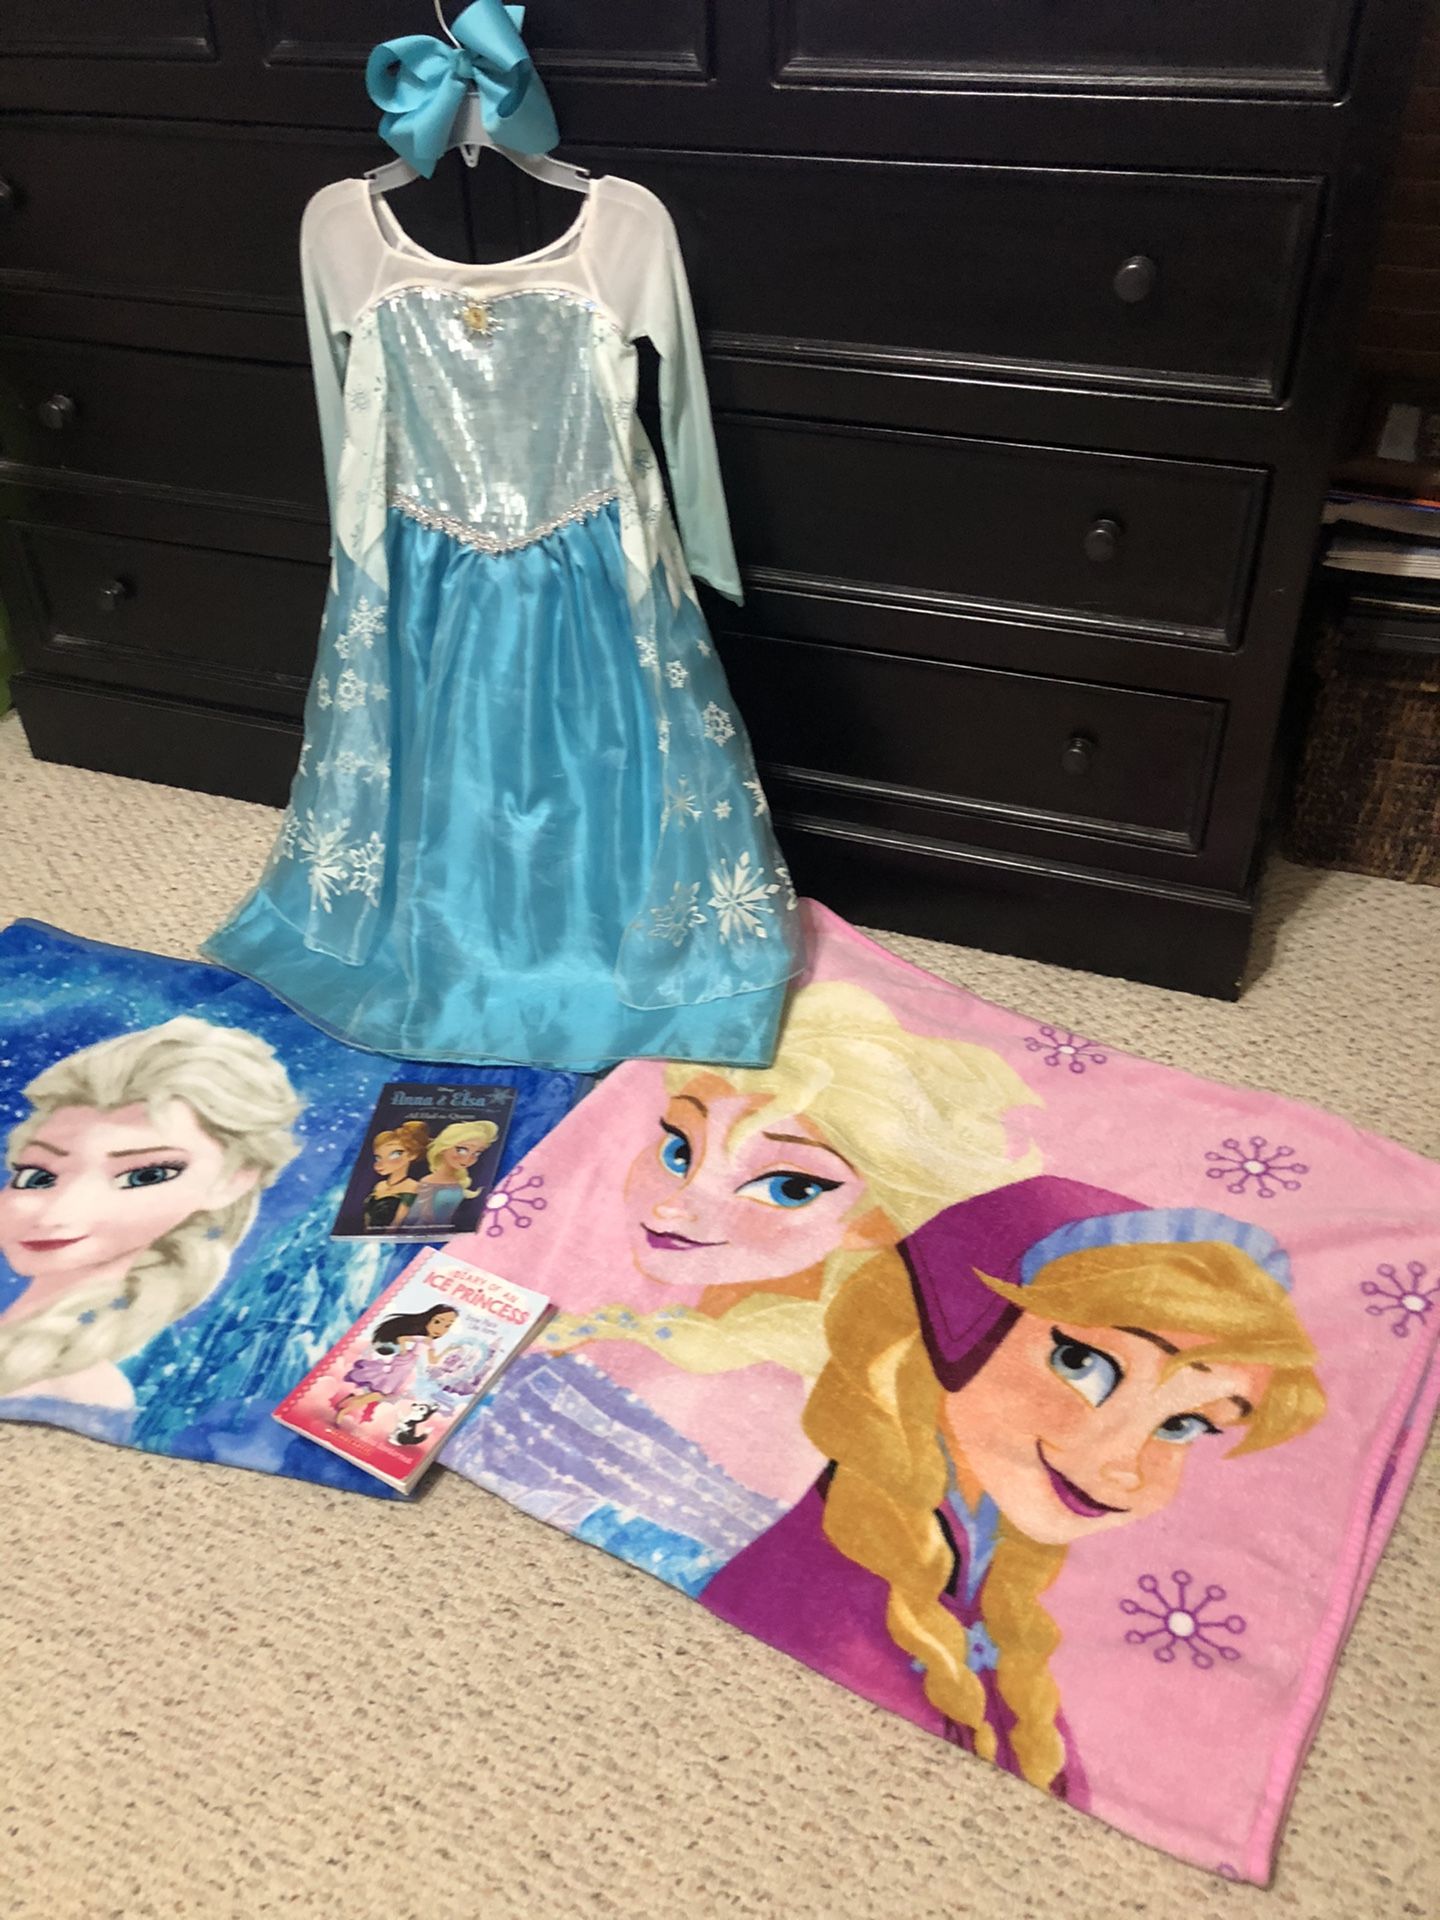 Disney Elsa Costume, Bow, 2 Blankets and 2 Books